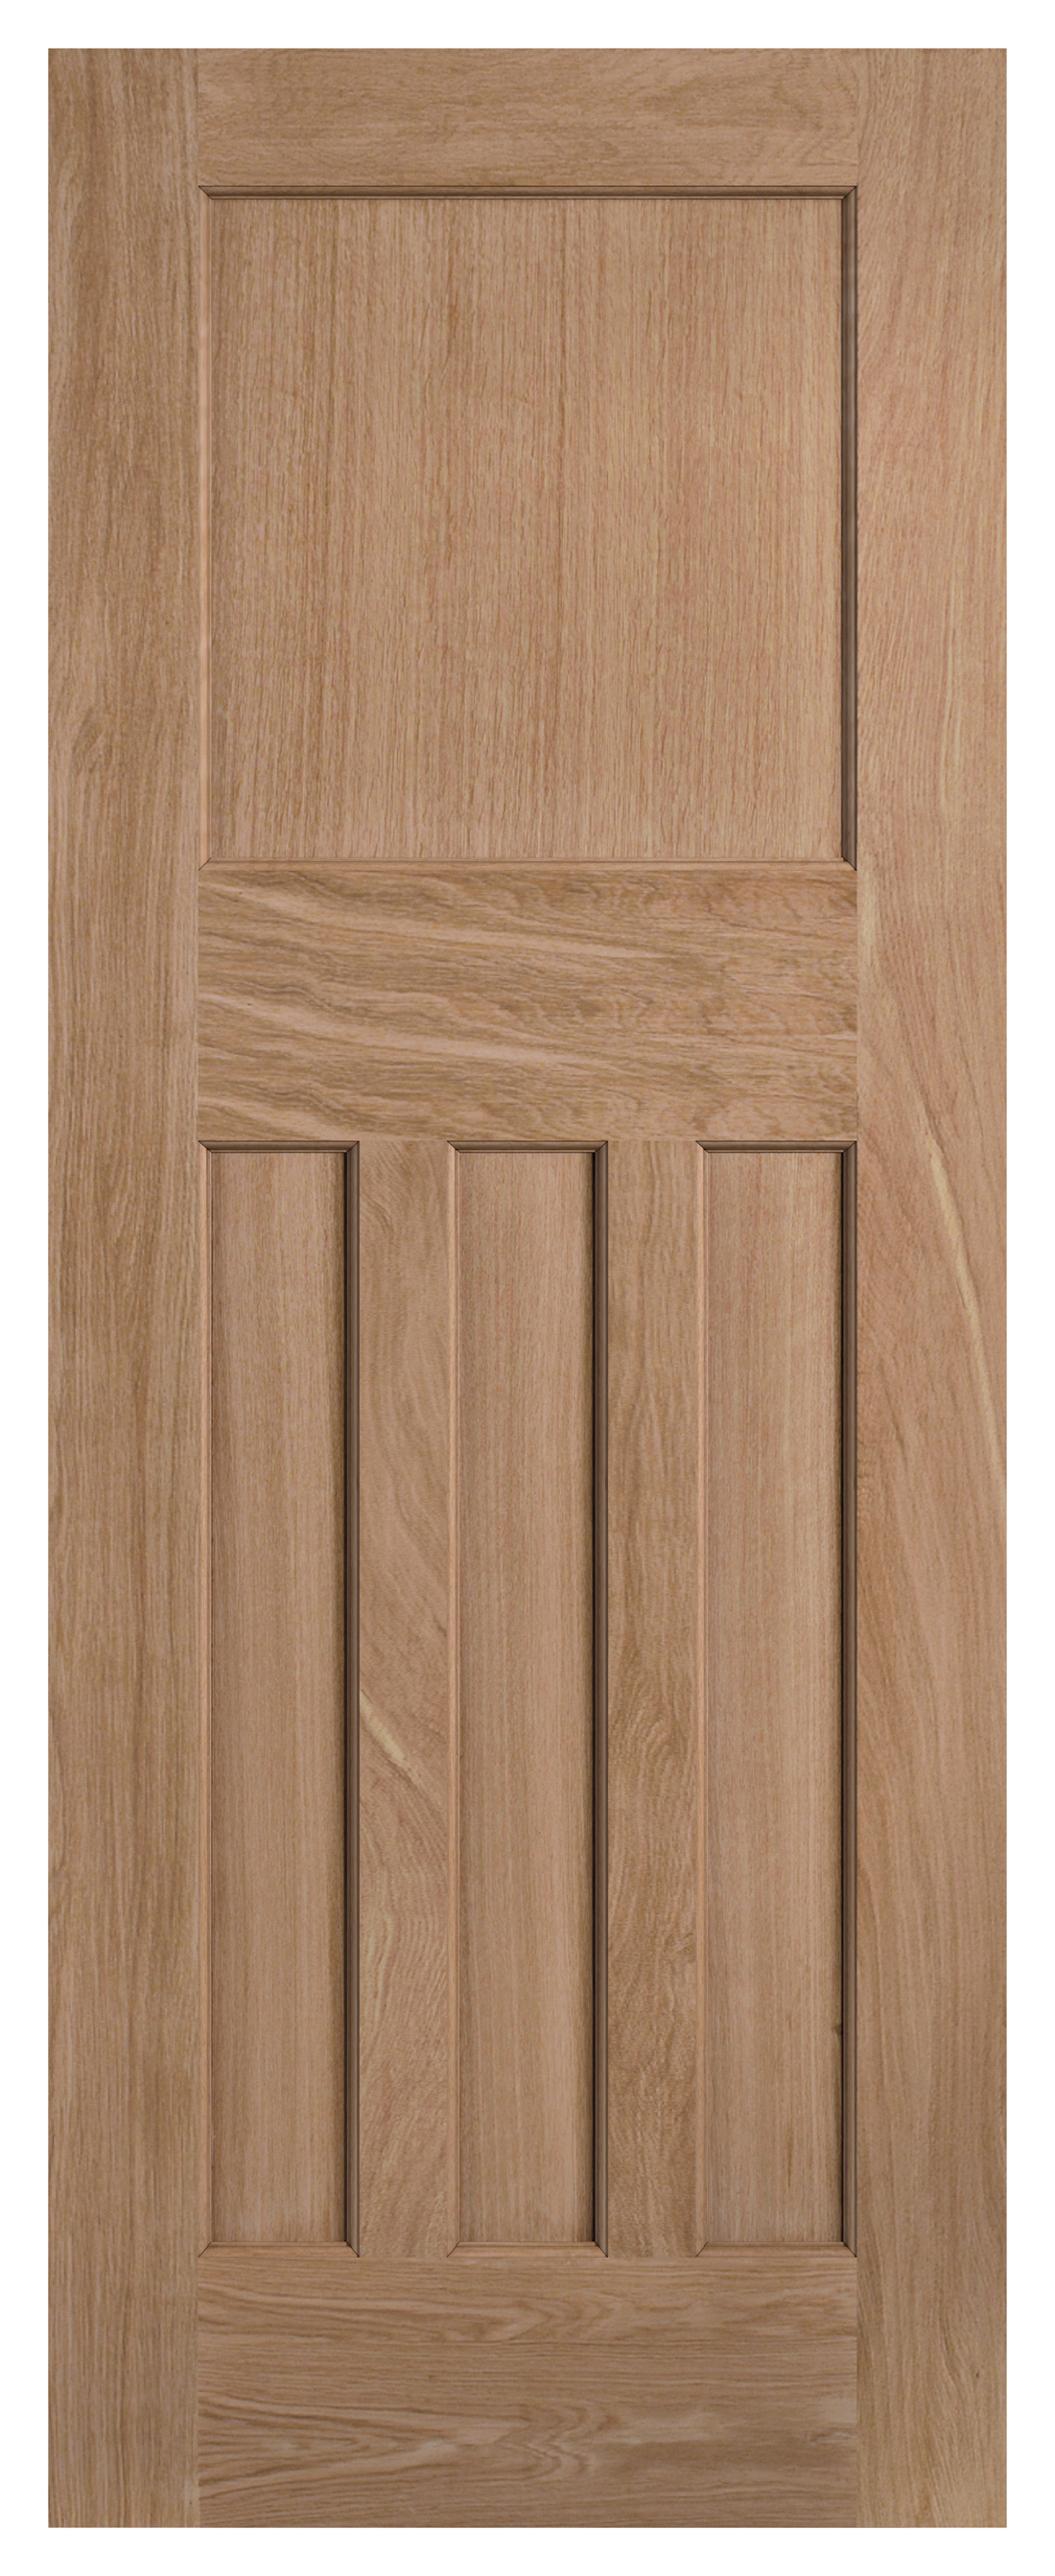 Image of LPD Internal DX 30s Unfinished Oak FD30 Fire Door - 826 x 2040mm